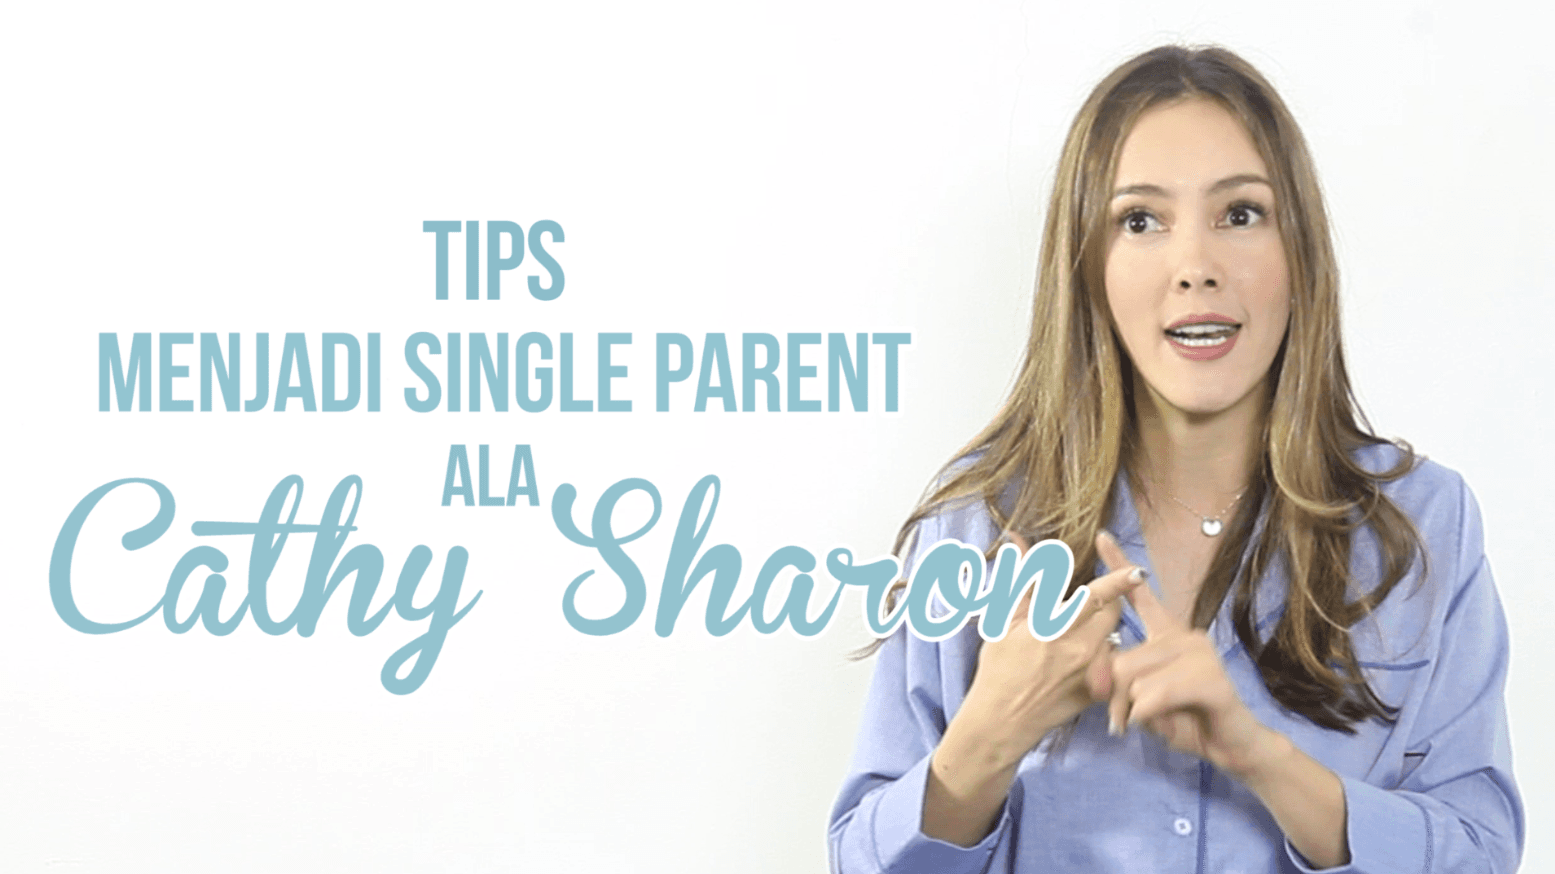 Tips Menjadi Single Parent Ala Cathy Sharon